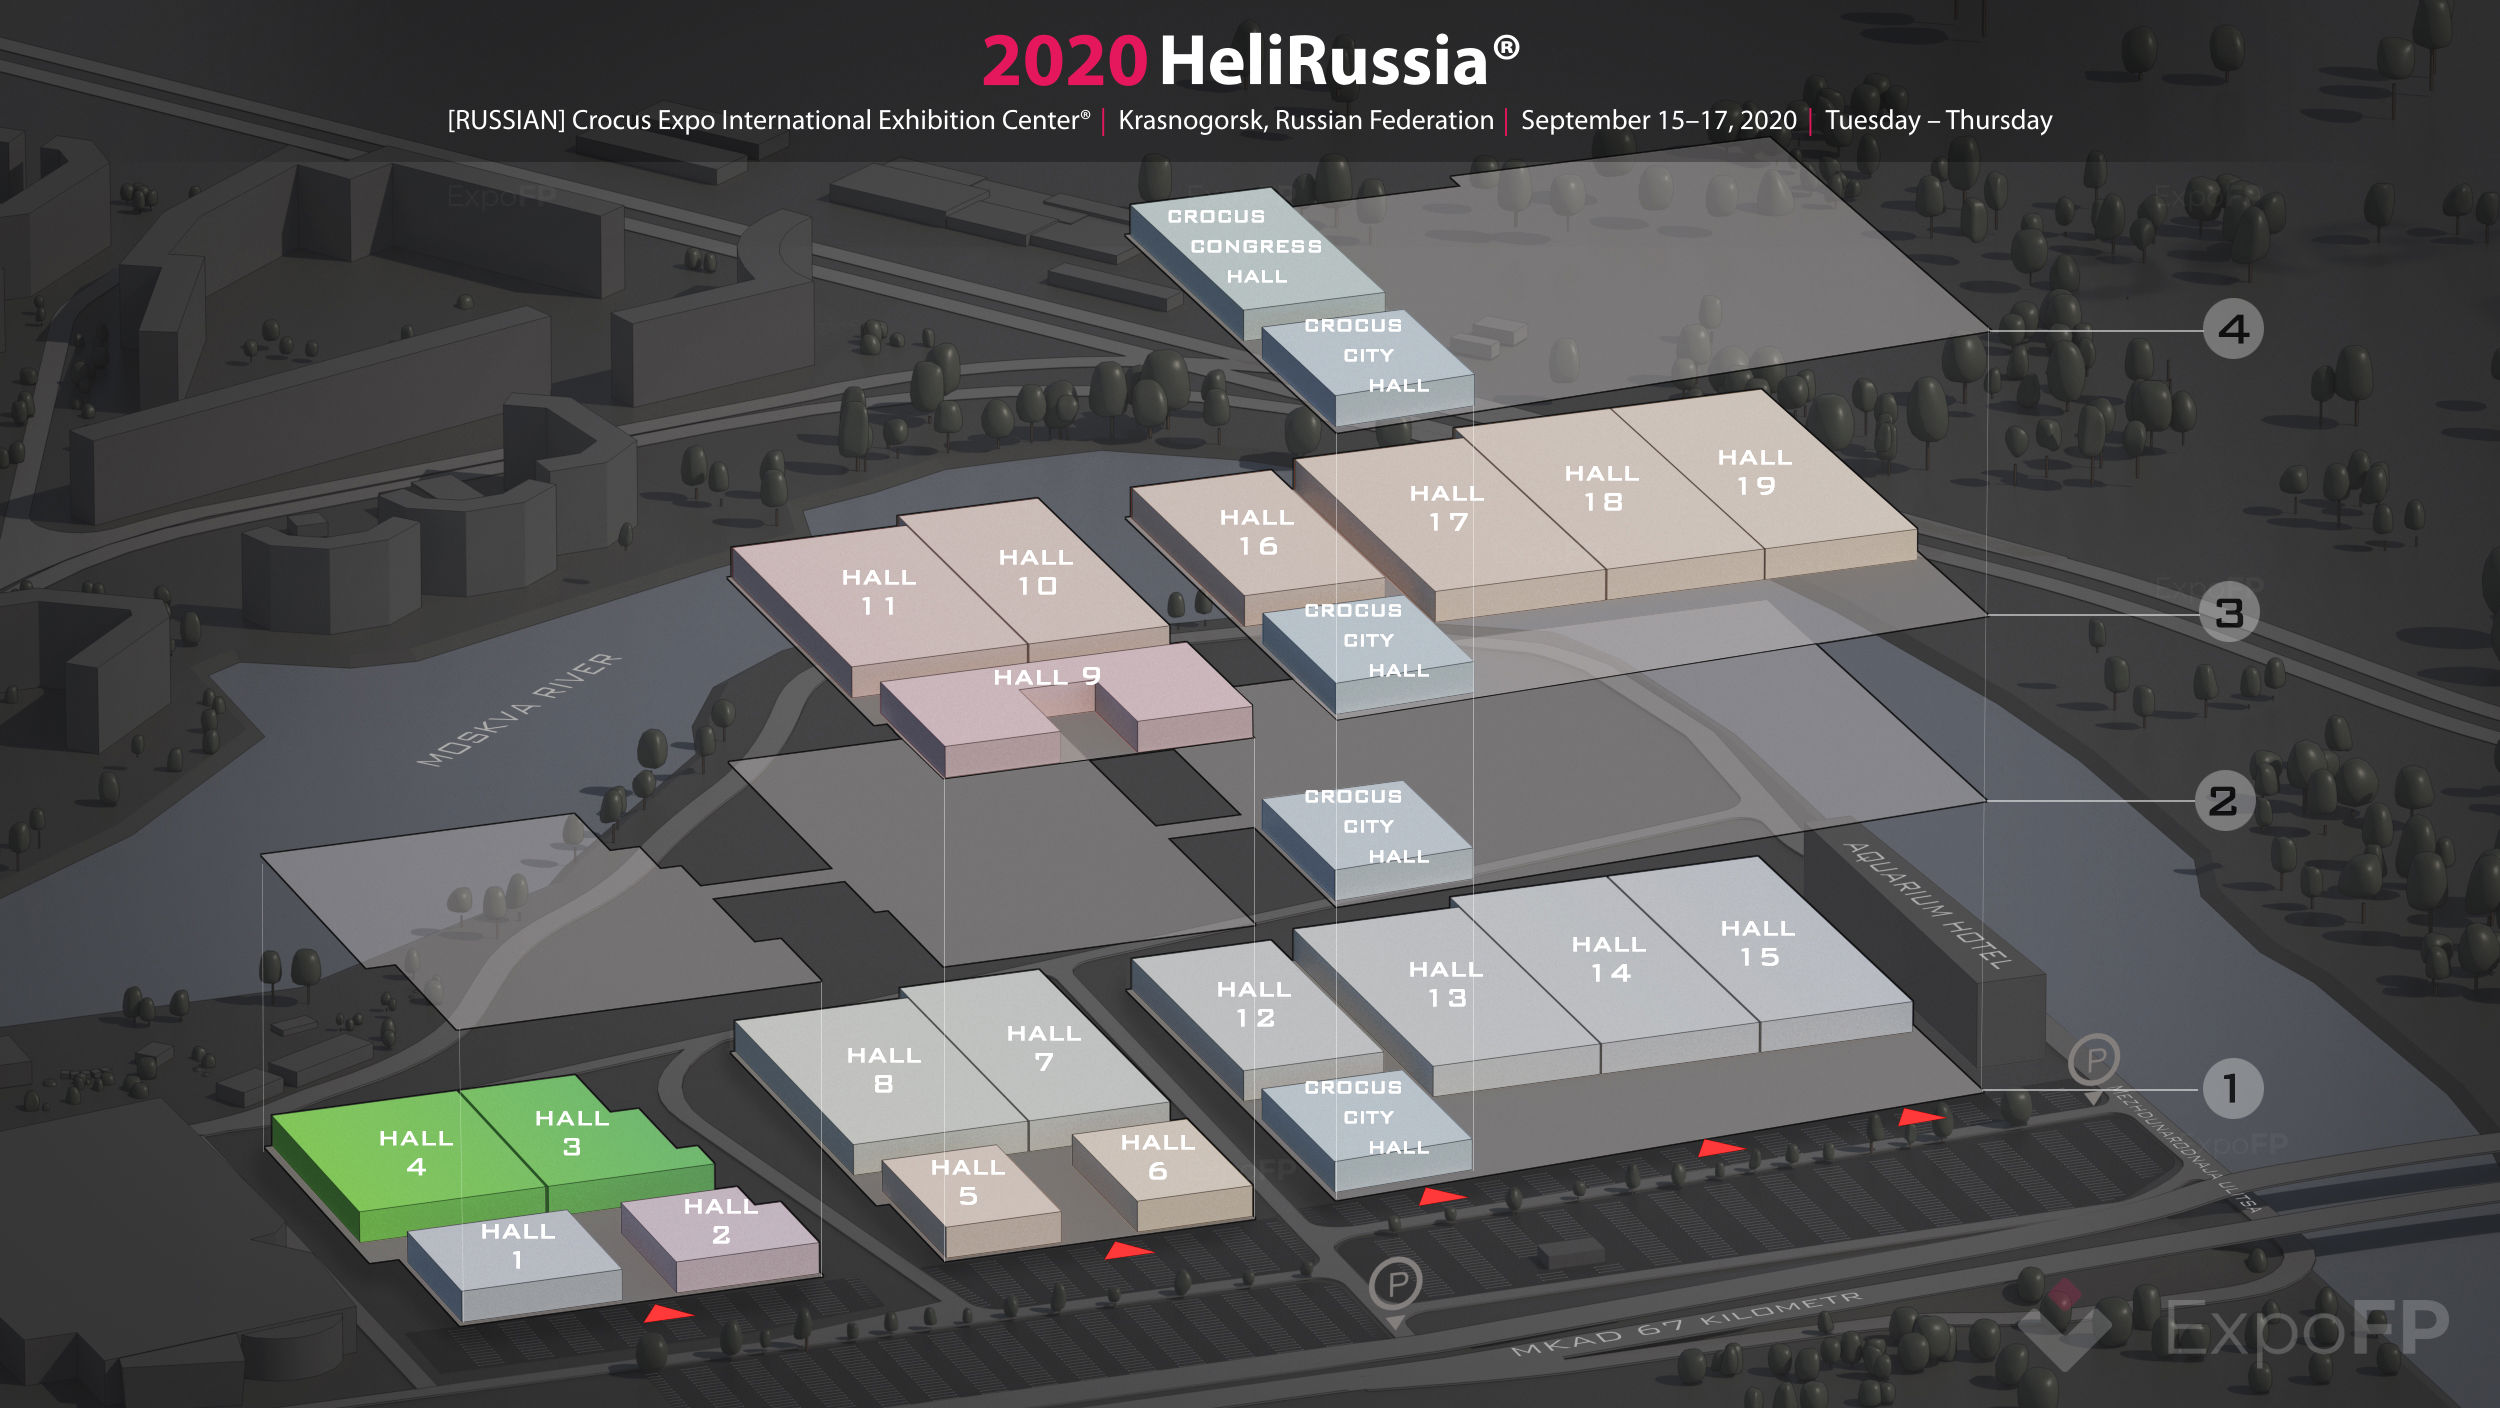 HeliRussia 2020 in Crocus Expo International Exhibition Center